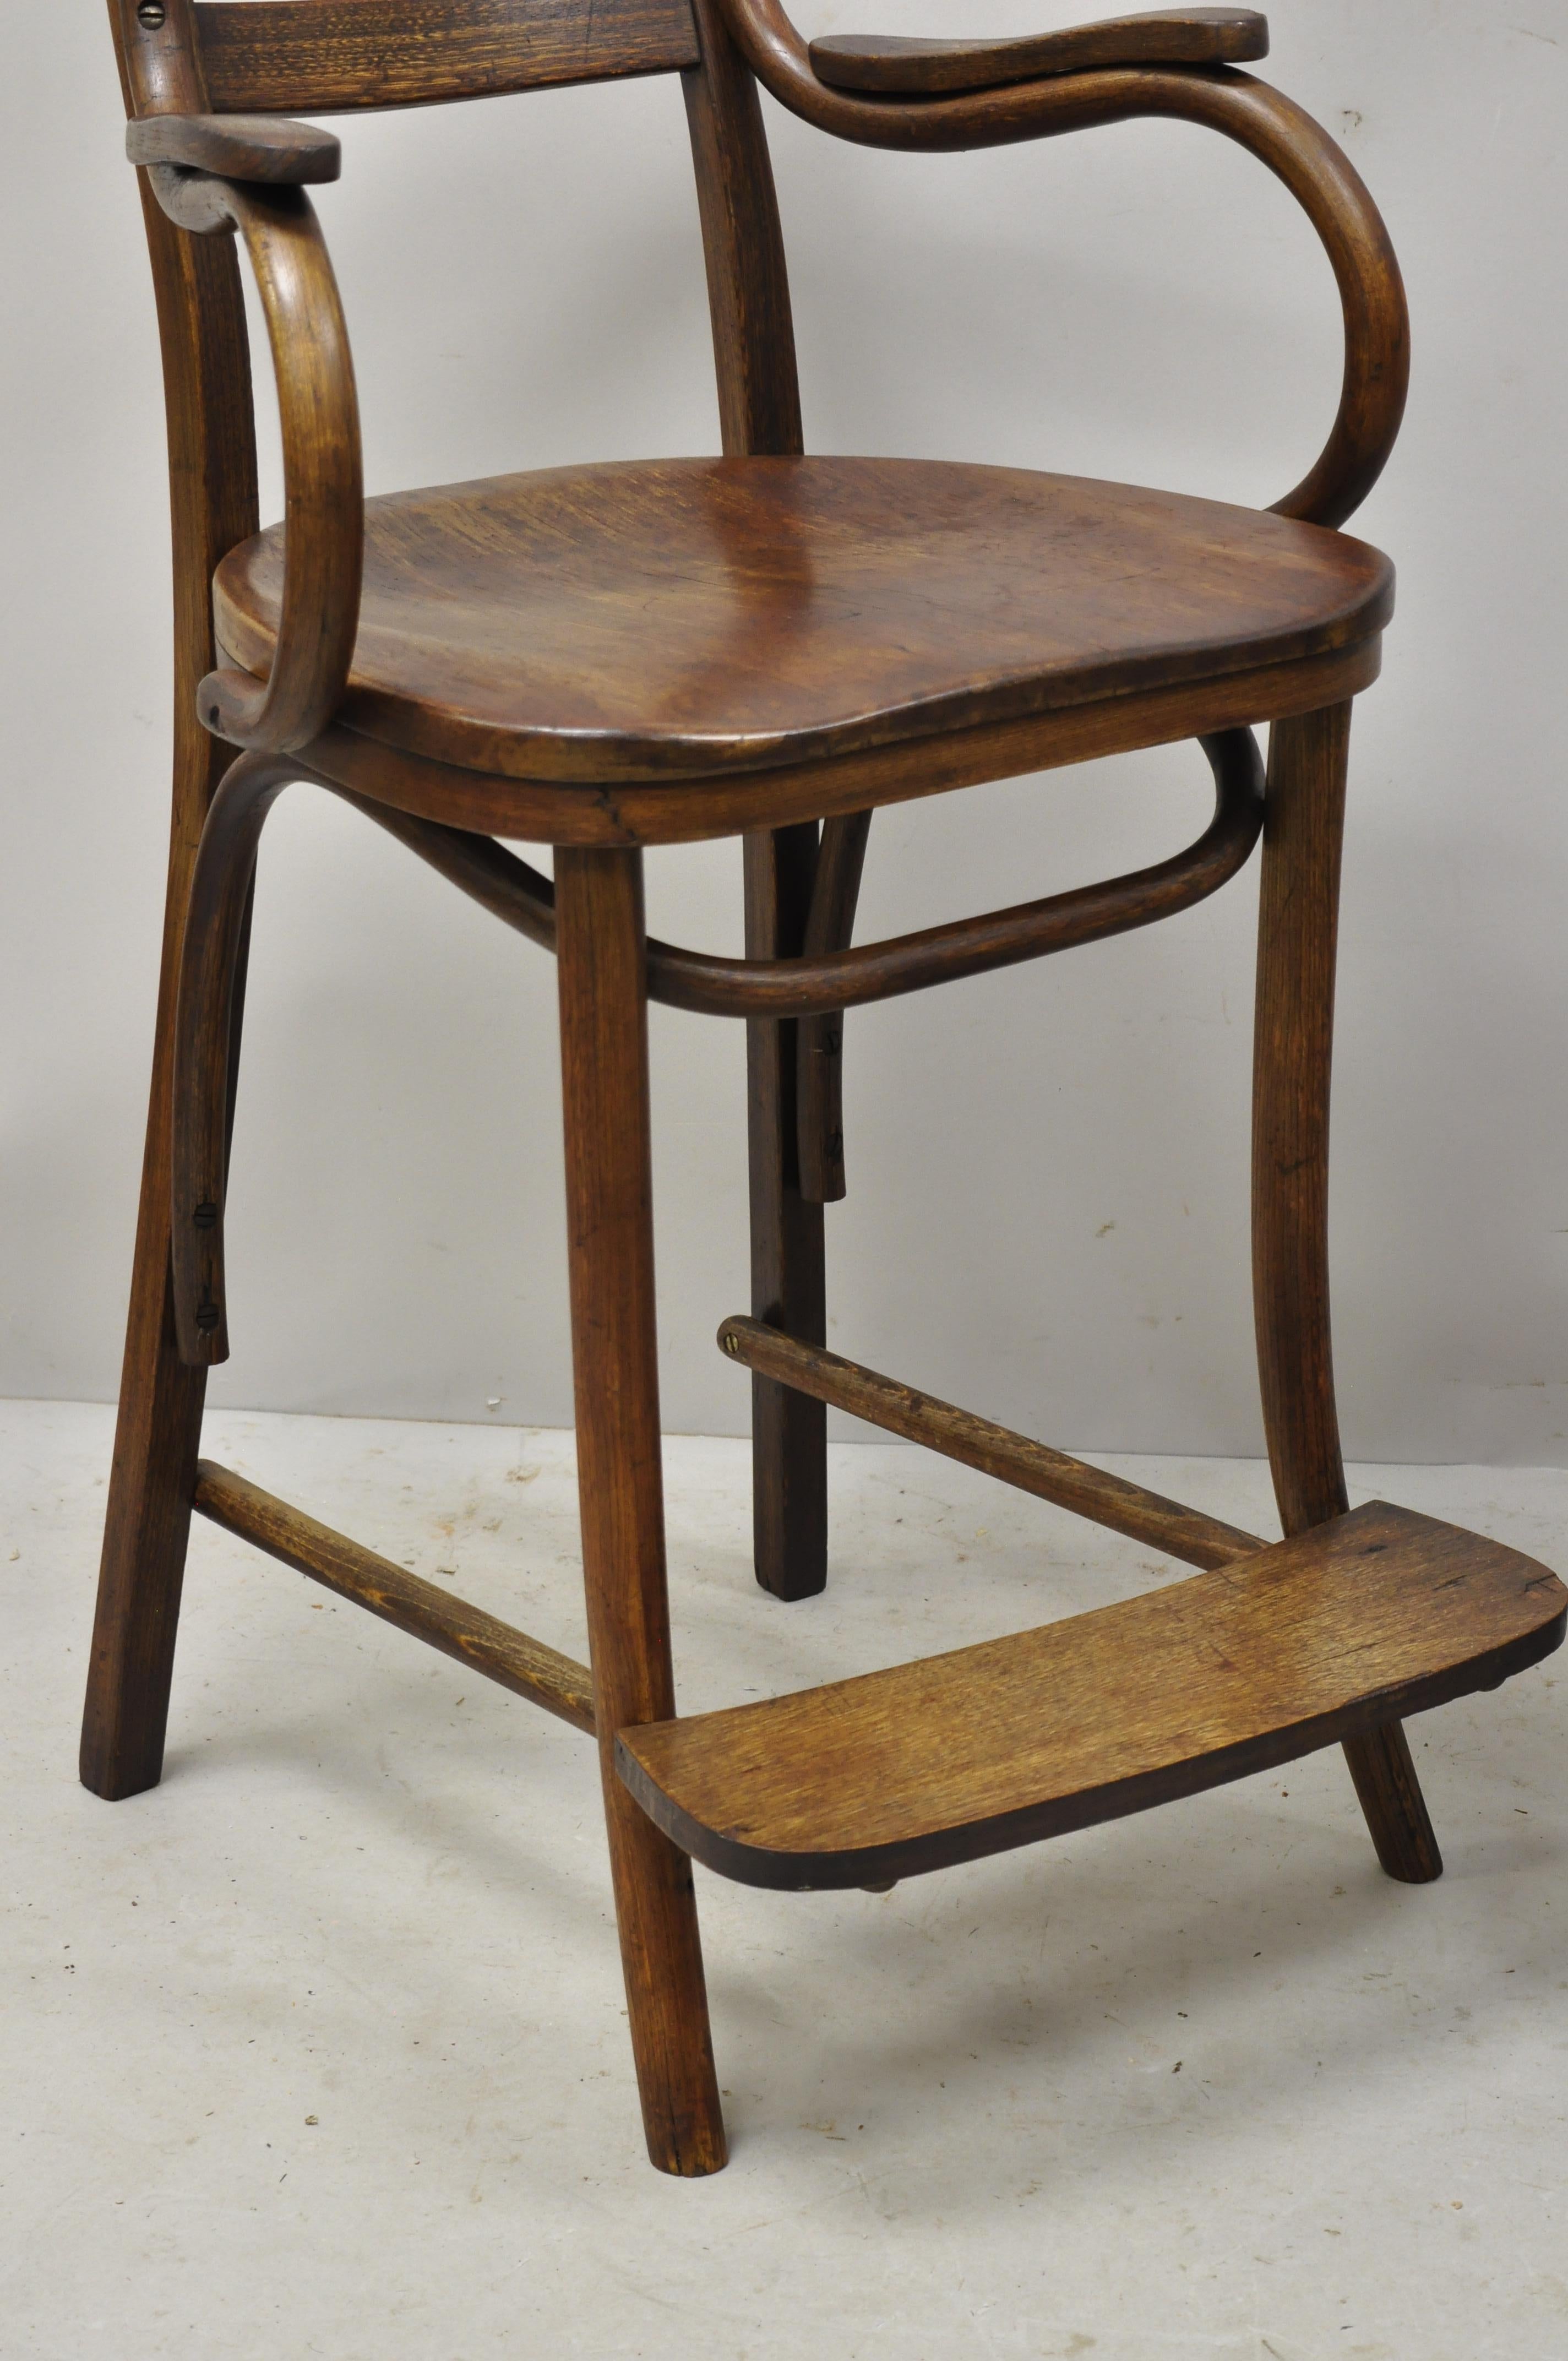 Antique Art Nouveau Thonet Style Austrian Bentwood Counter Stool Chairs, a Pair 1